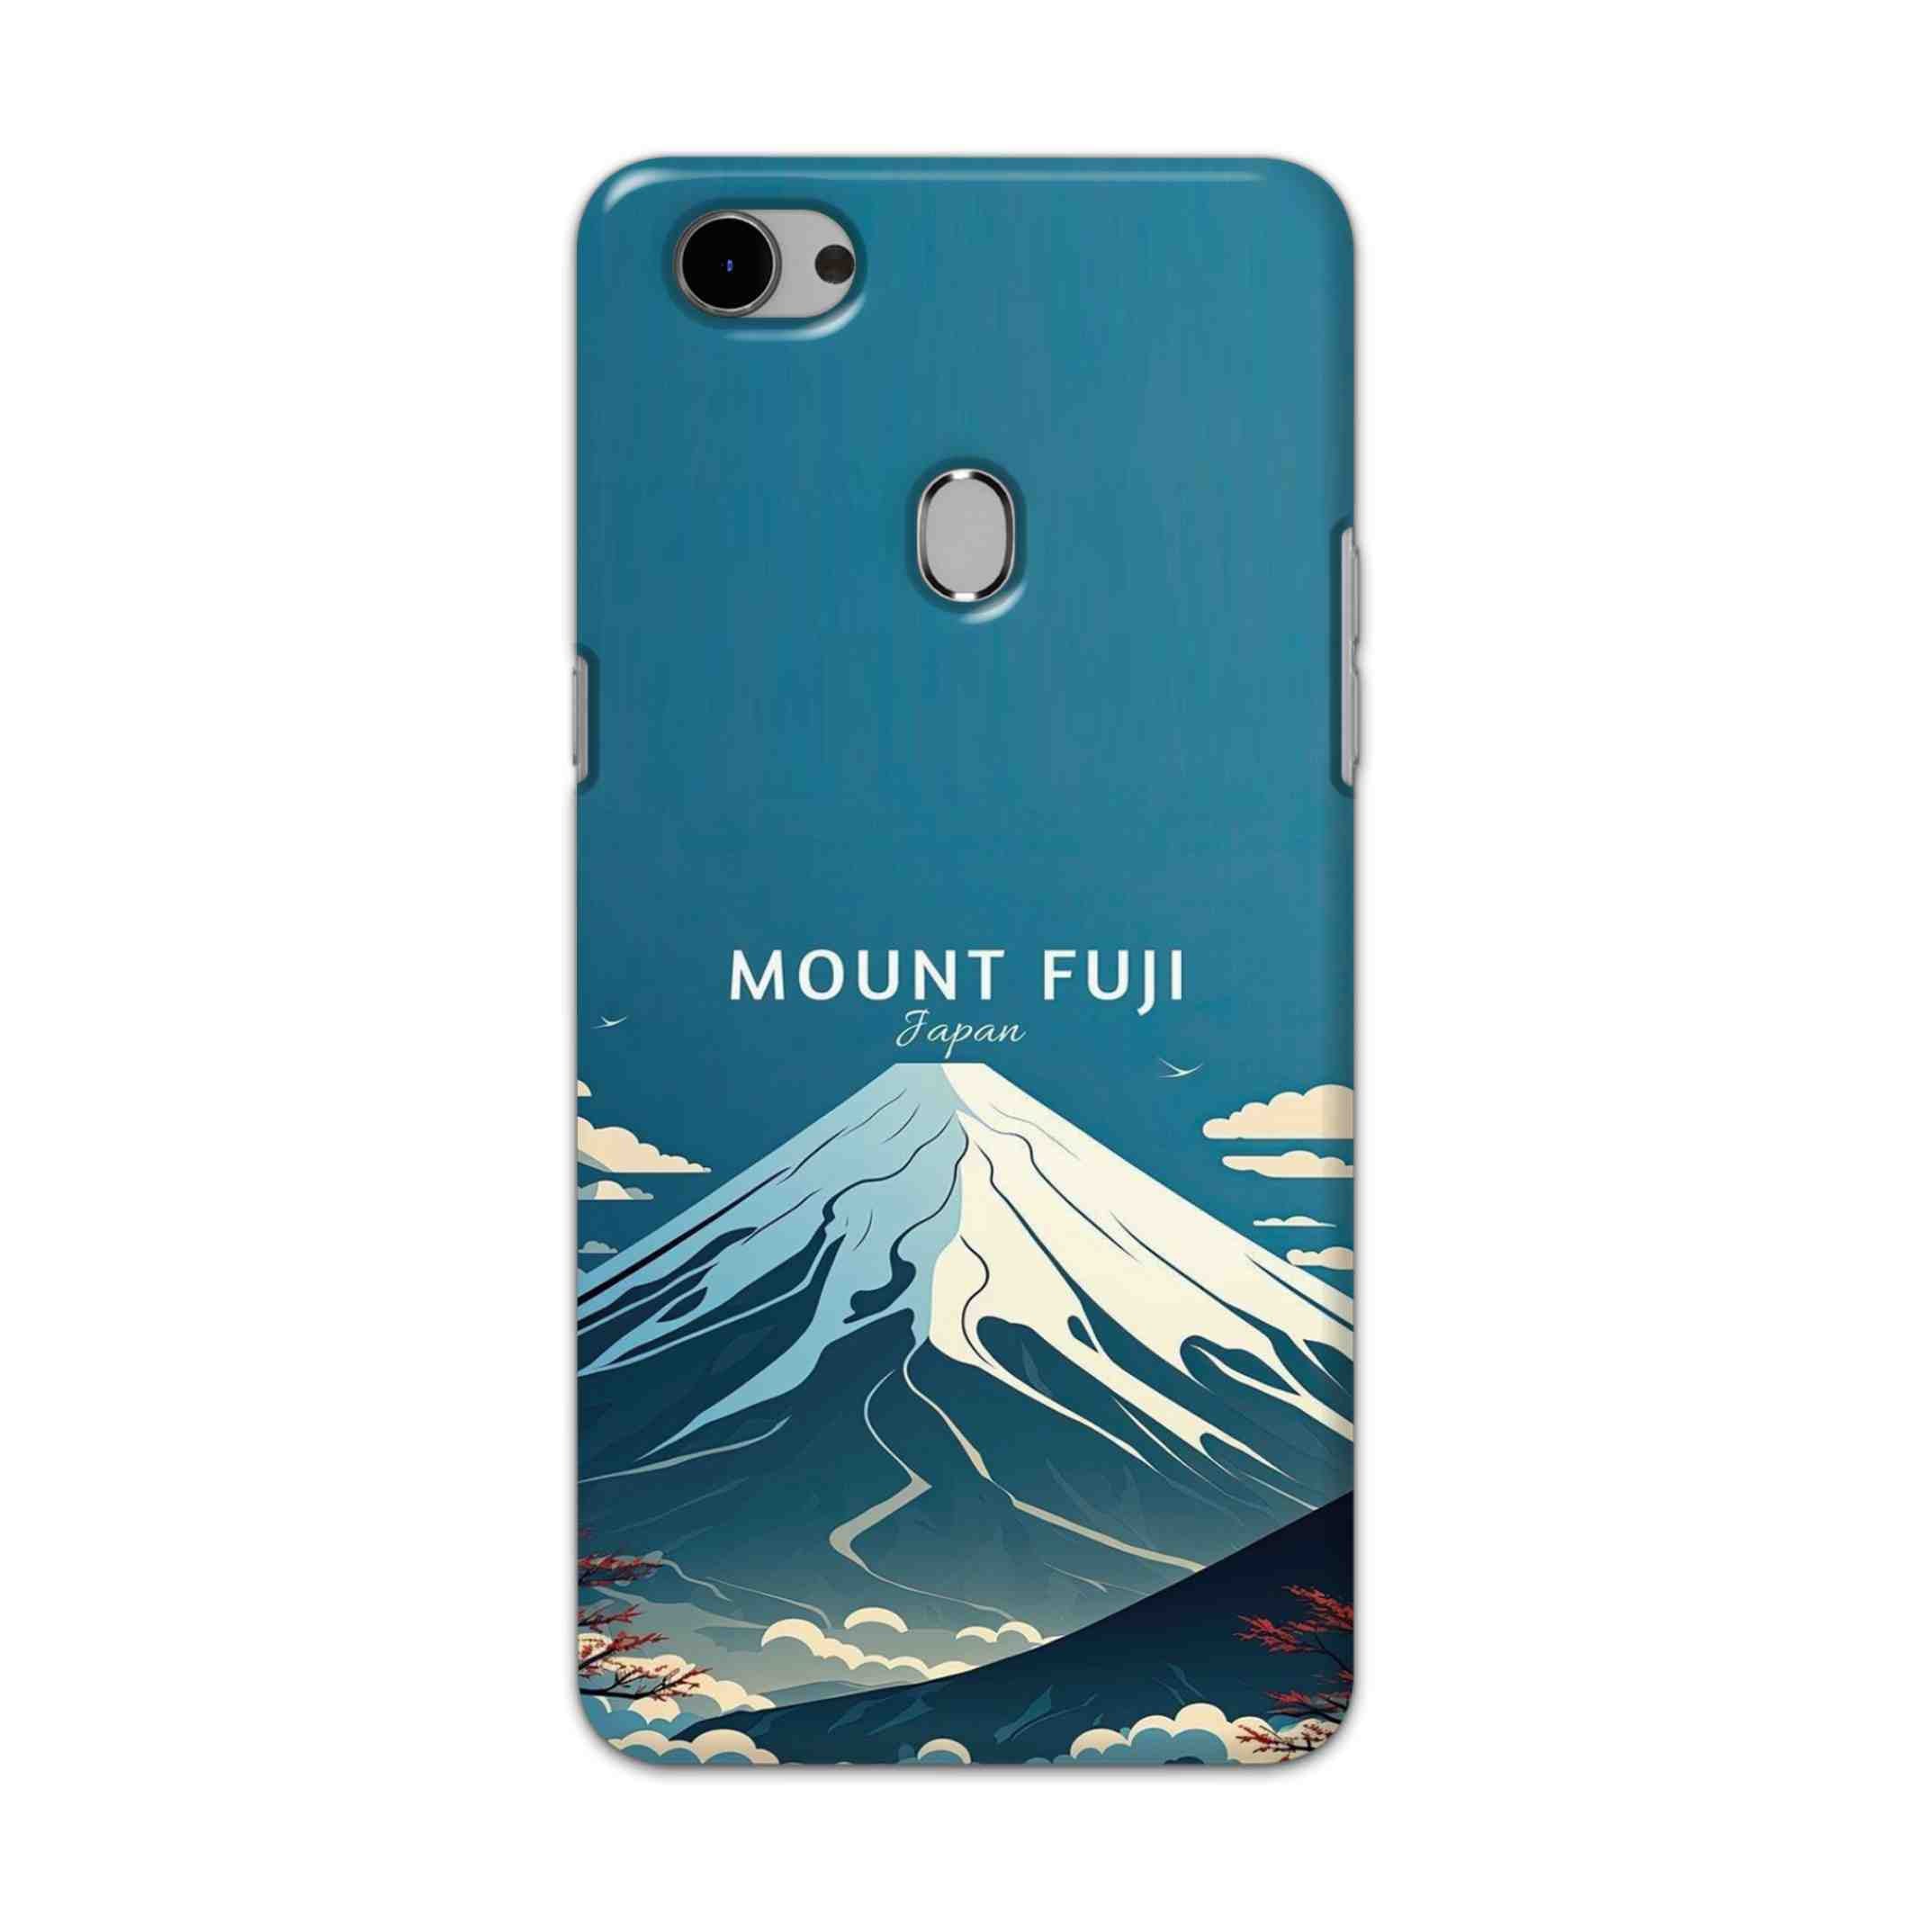 Buy Mount Fuji Hard Back Mobile Phone Case Cover For Oppo F7 Online